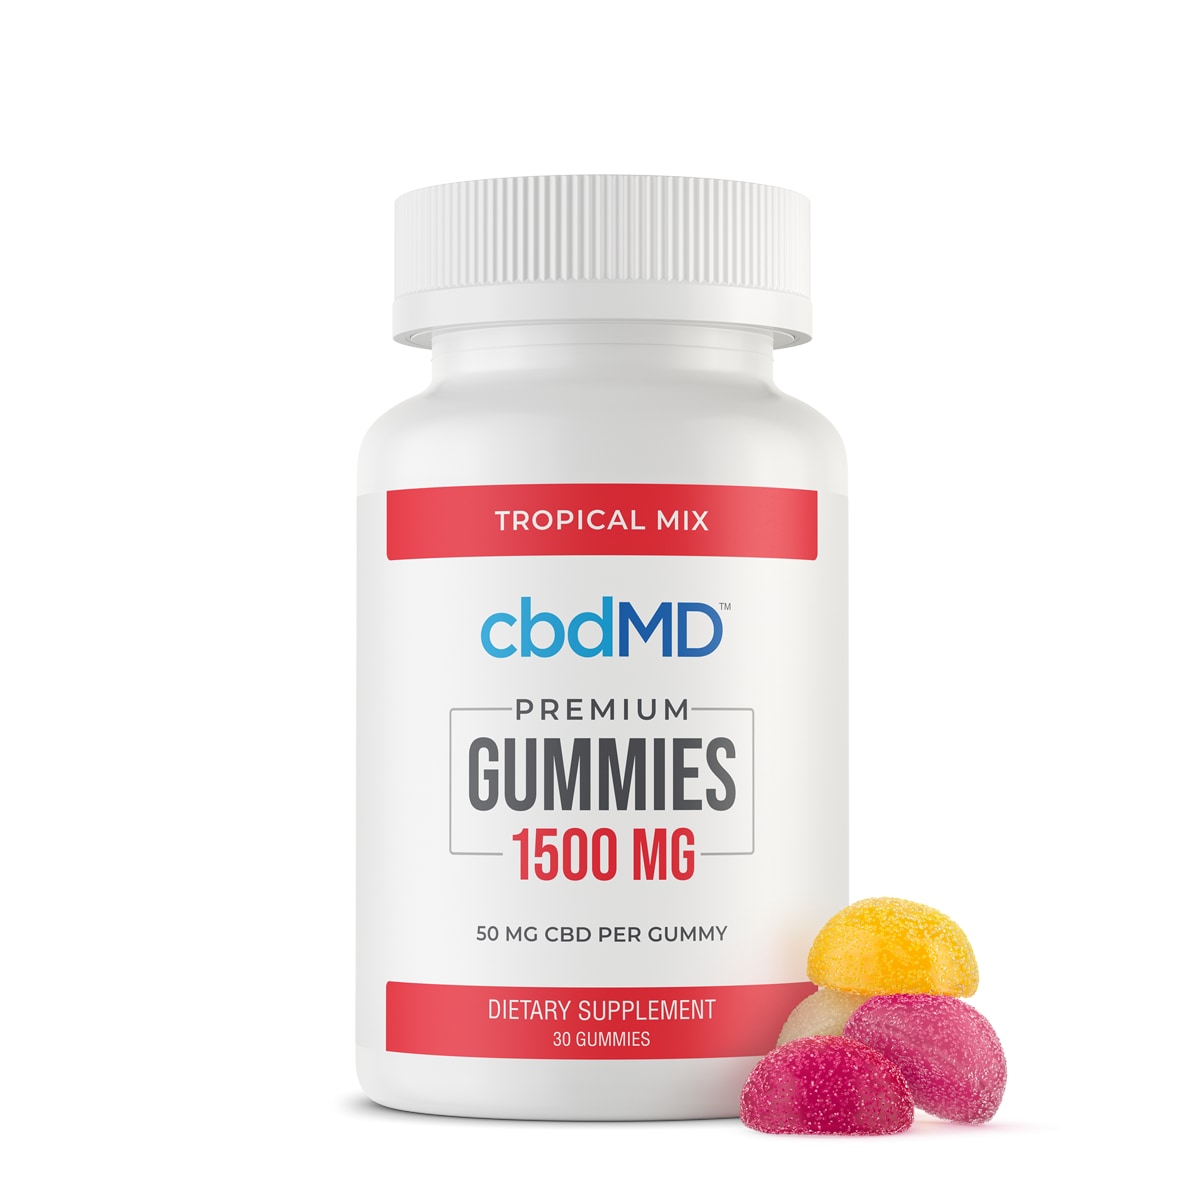 cbdMD premium gummies 1500 mg CBD